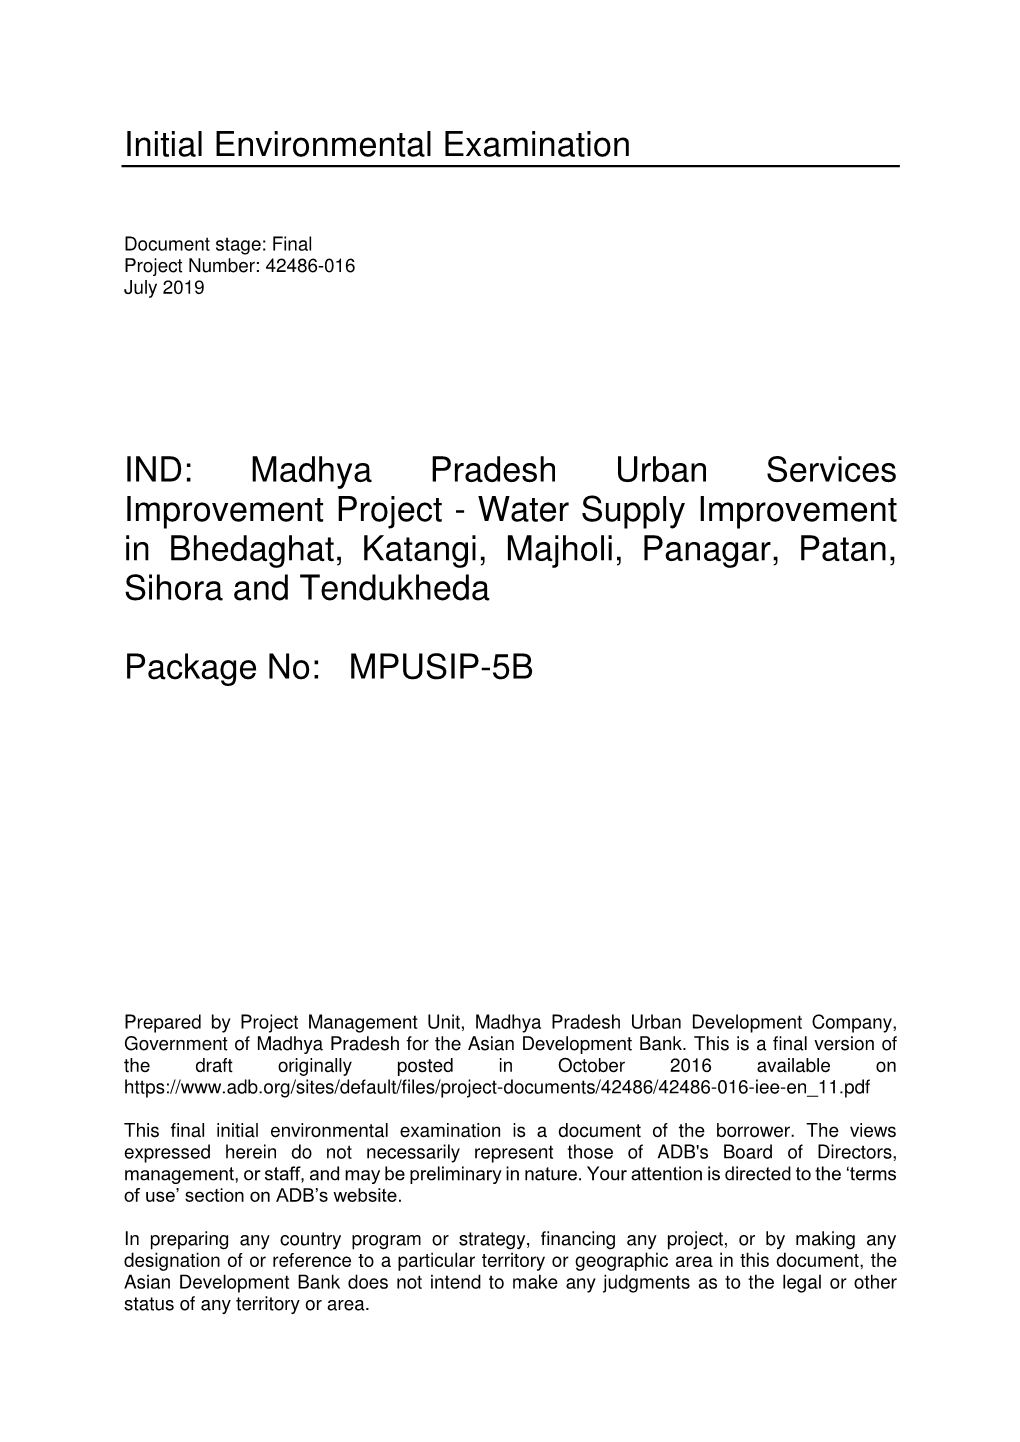 Madhya Pradesh Urban Services Improvement Project - Water Supply Improvement in Bhedaghat, Katangi, Majholi, Panagar, Patan, Sihora and Tendukheda